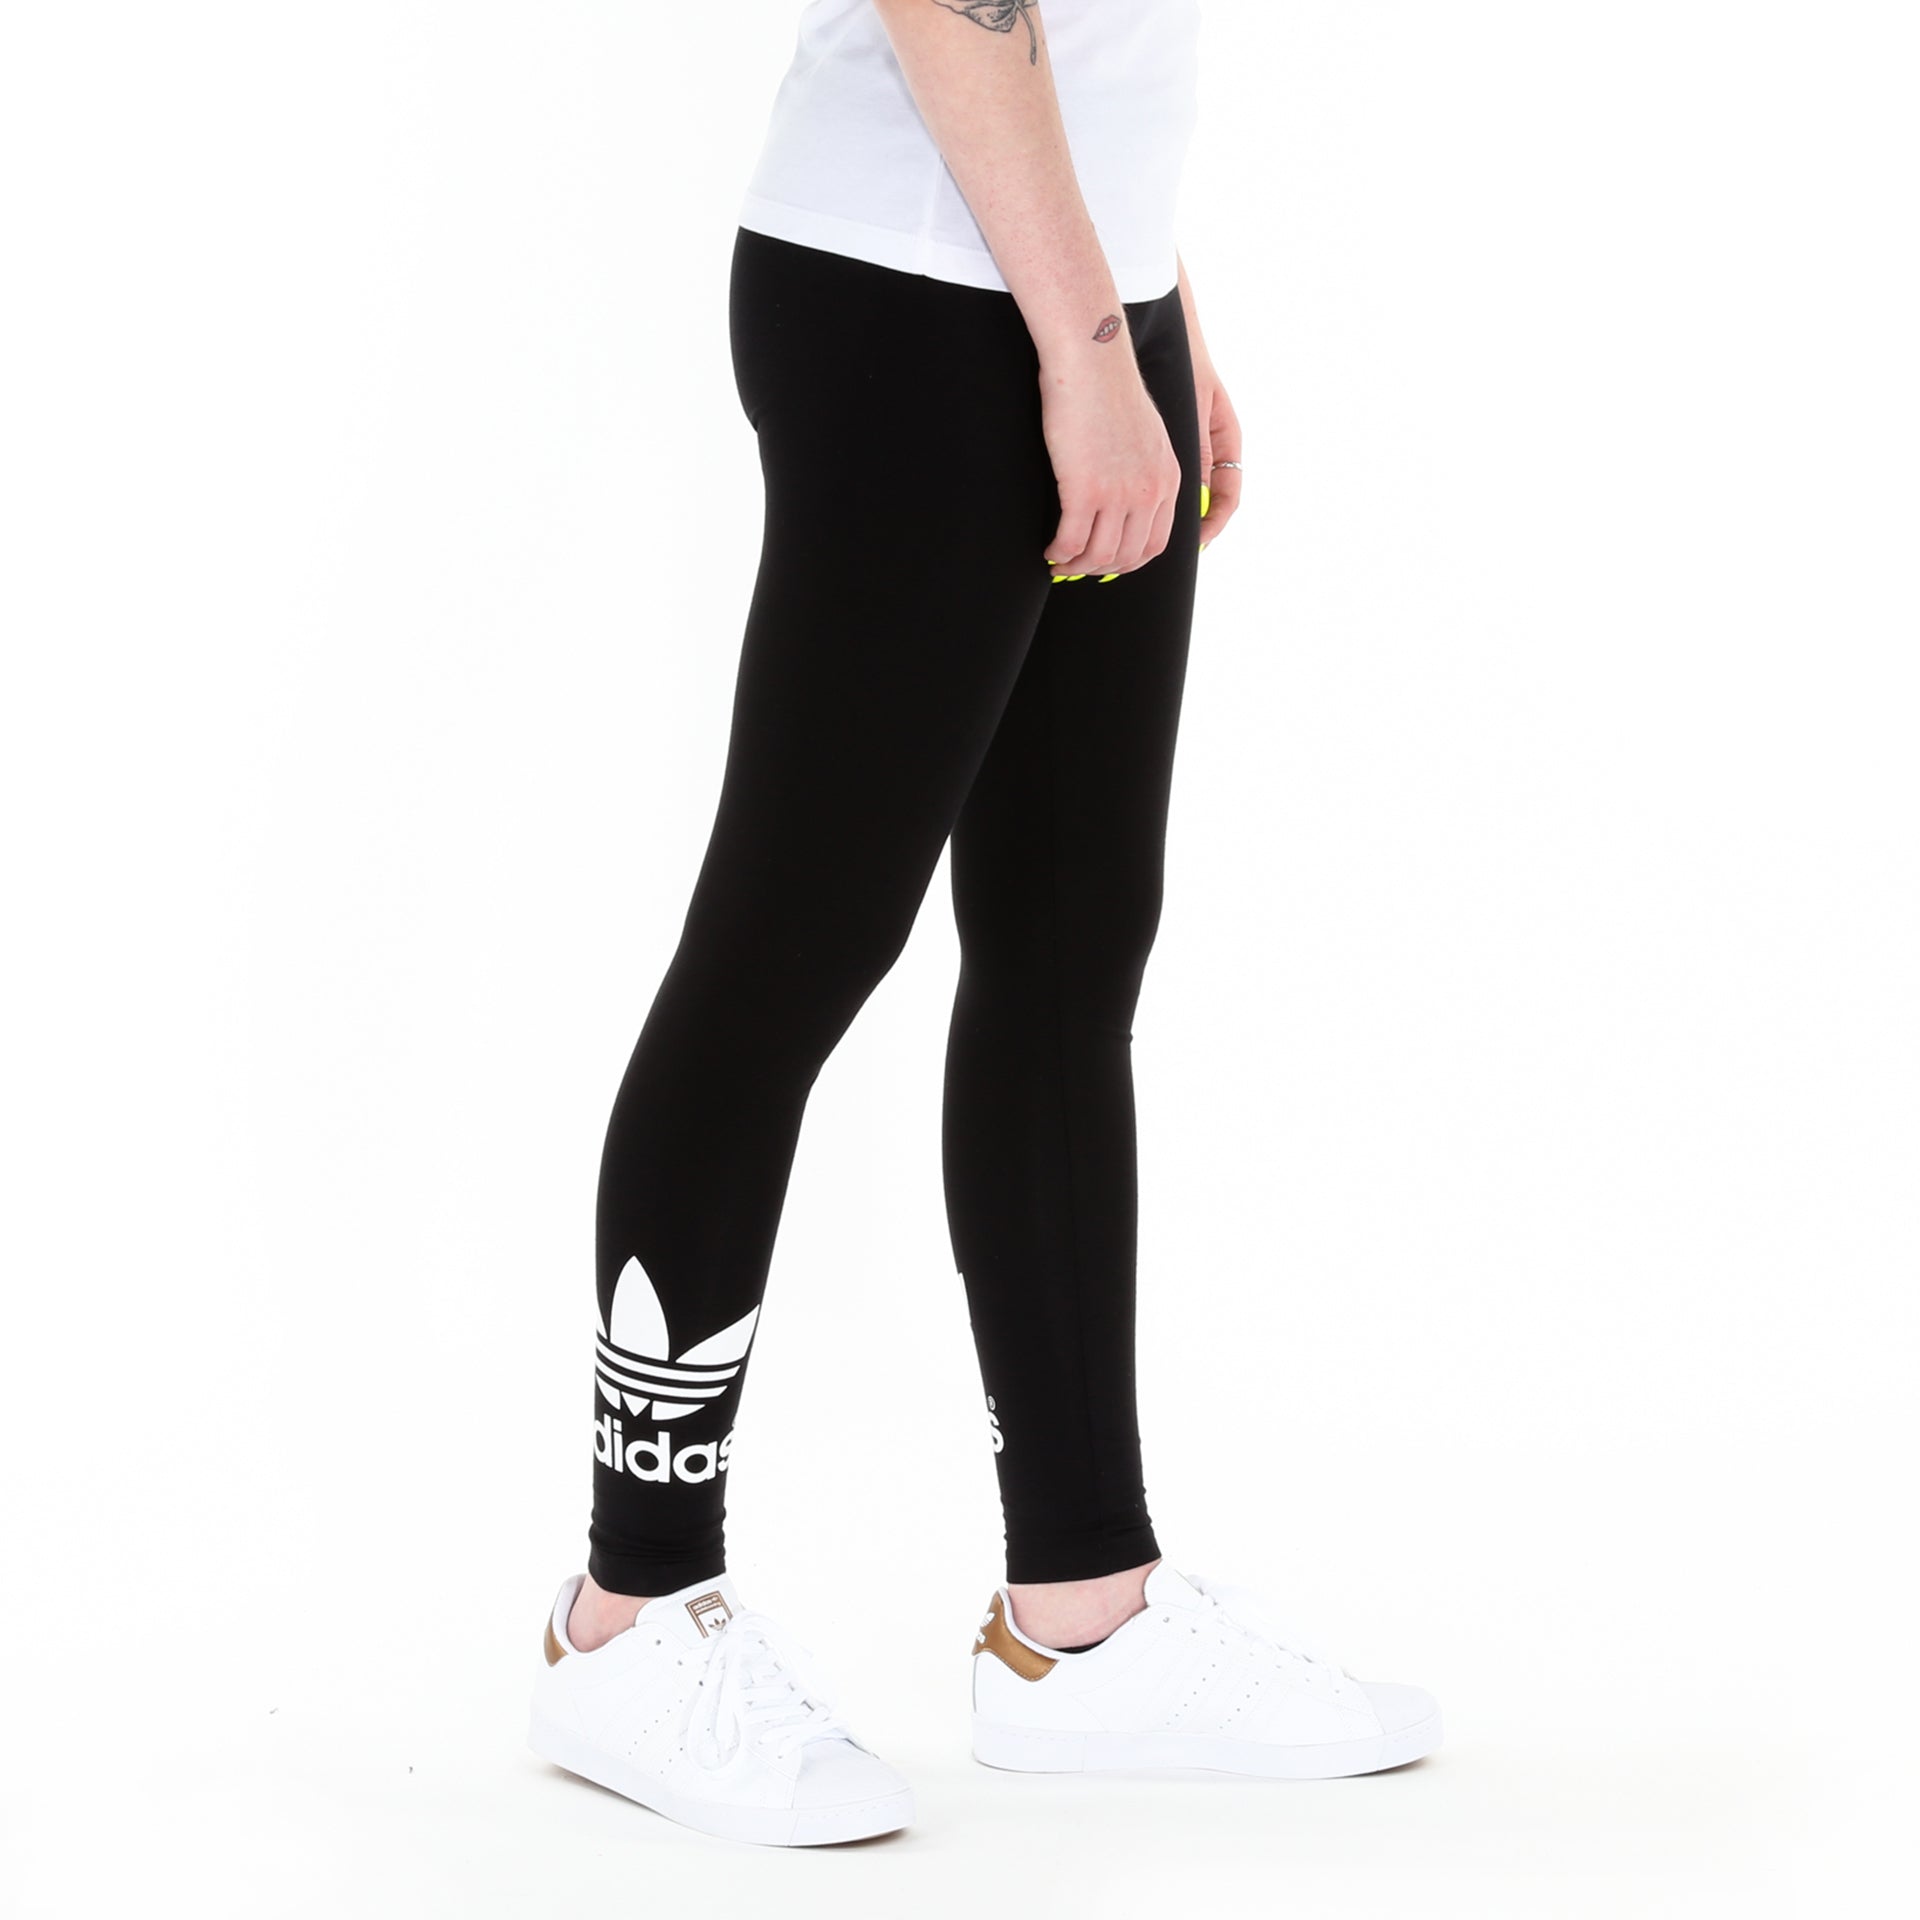 Adidas Original's Women’s Trefoil Leggings Black